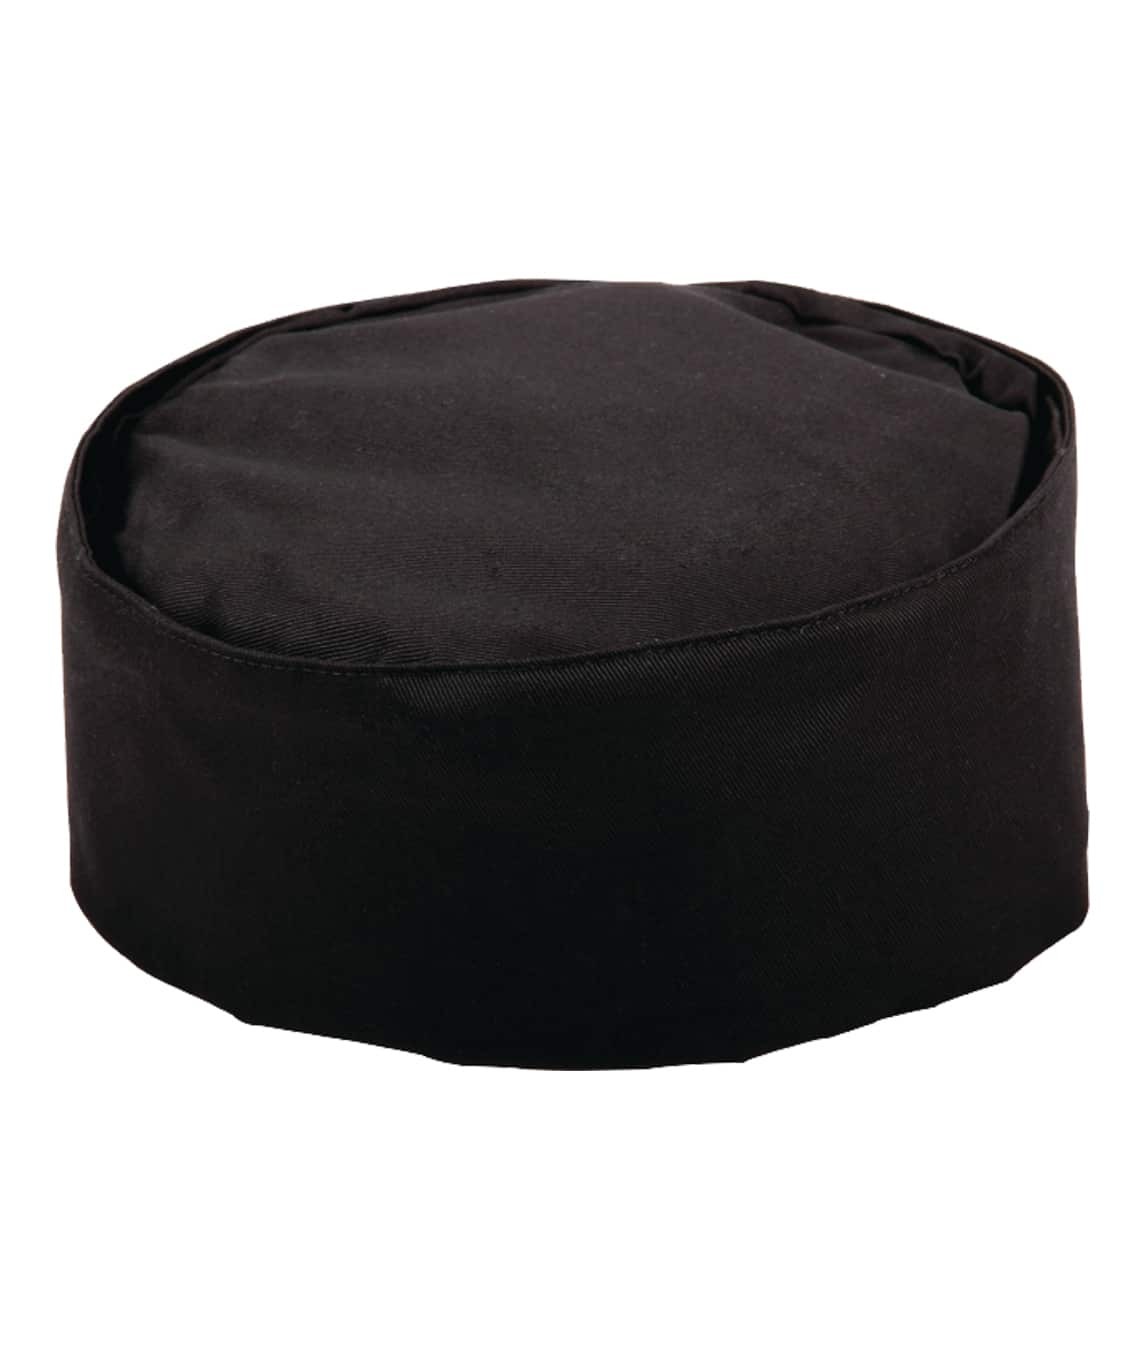 Chef's Hat: Unisex